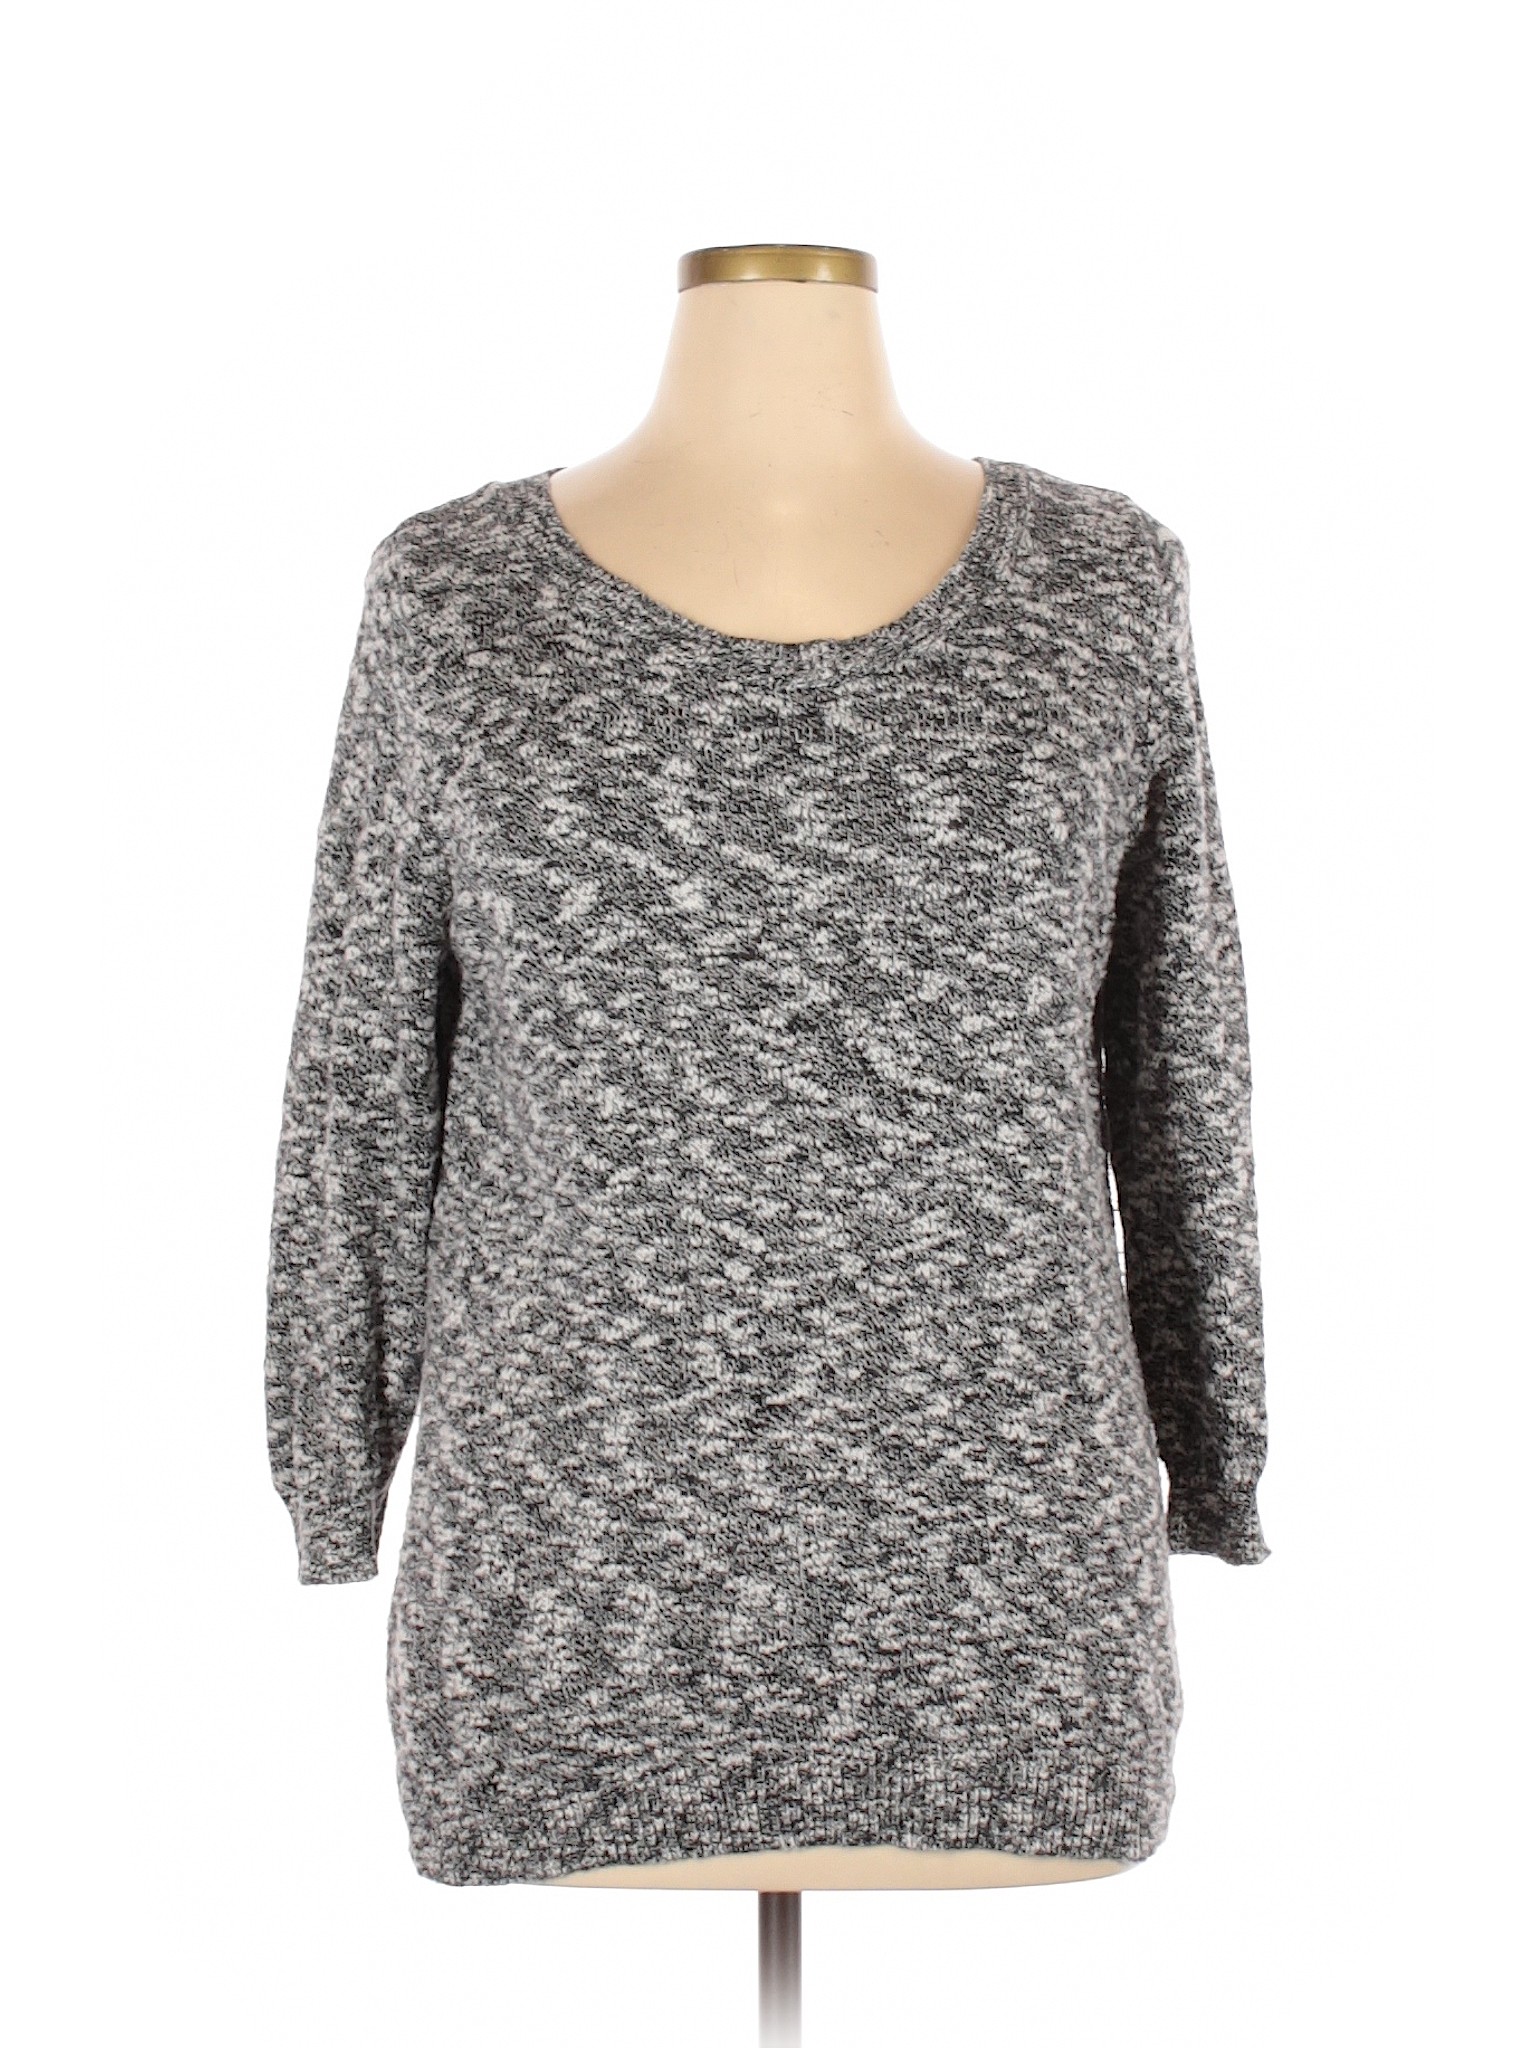 Old Navy Women Gray Pullover Sweater XL | eBay